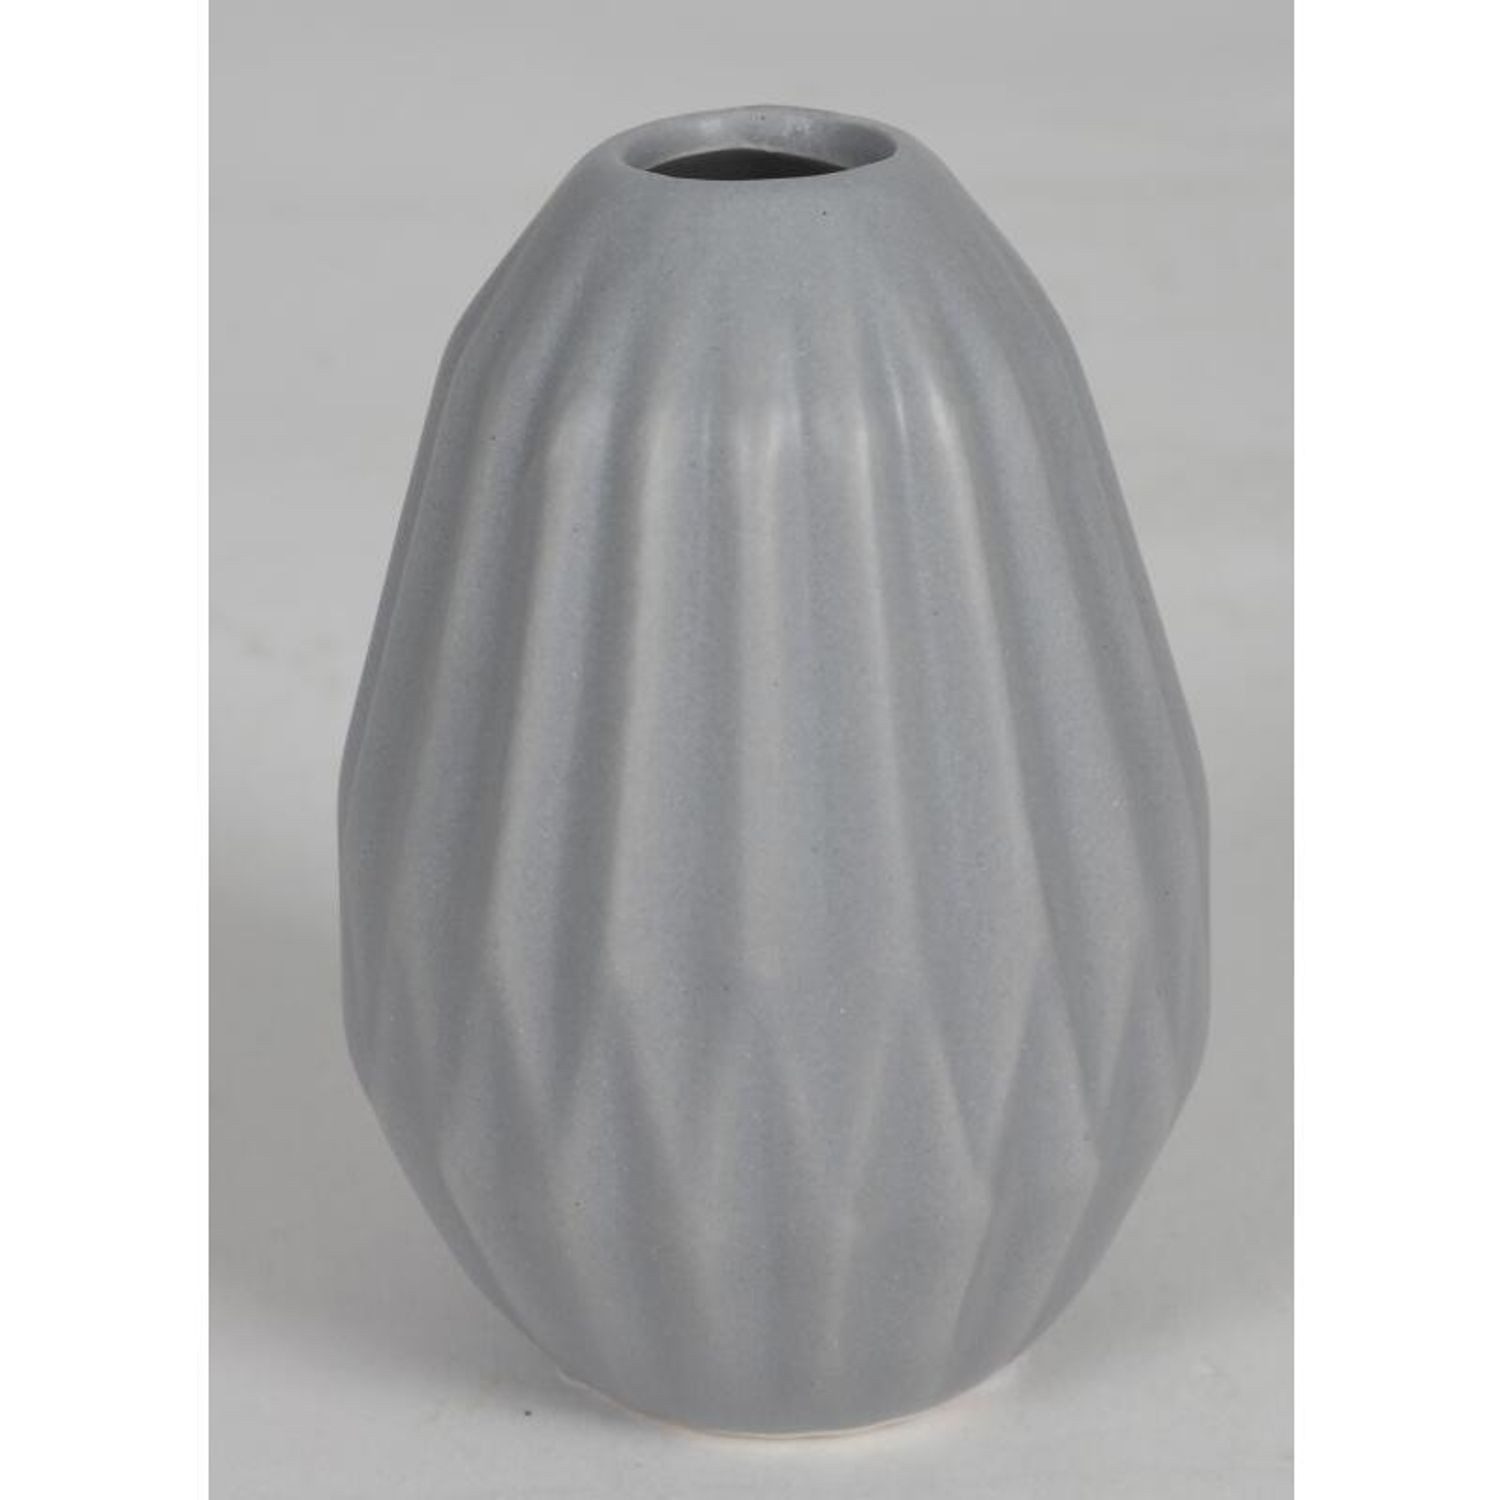 BURI Tischvase 6 Stück Keramik-Vasen in grau elegantes Rillendesign ø7x10cm Dekoratio